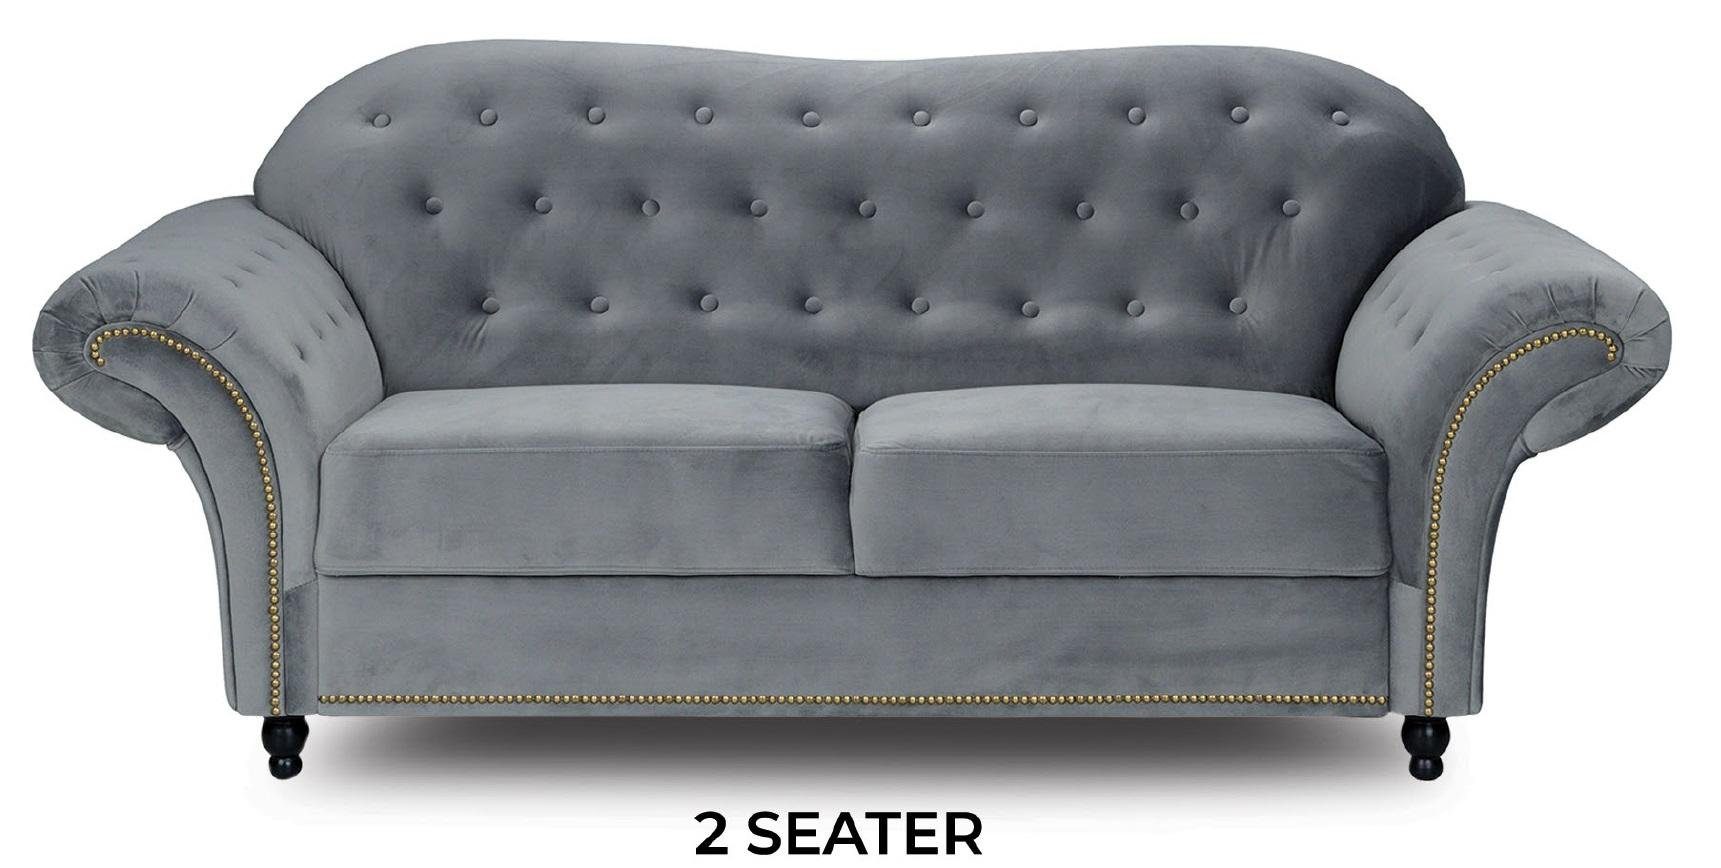 JVmoebel Sofa Stilvolles Chesterfield Sofa Zweisitzer Graue Couch Neu, Made in Europe